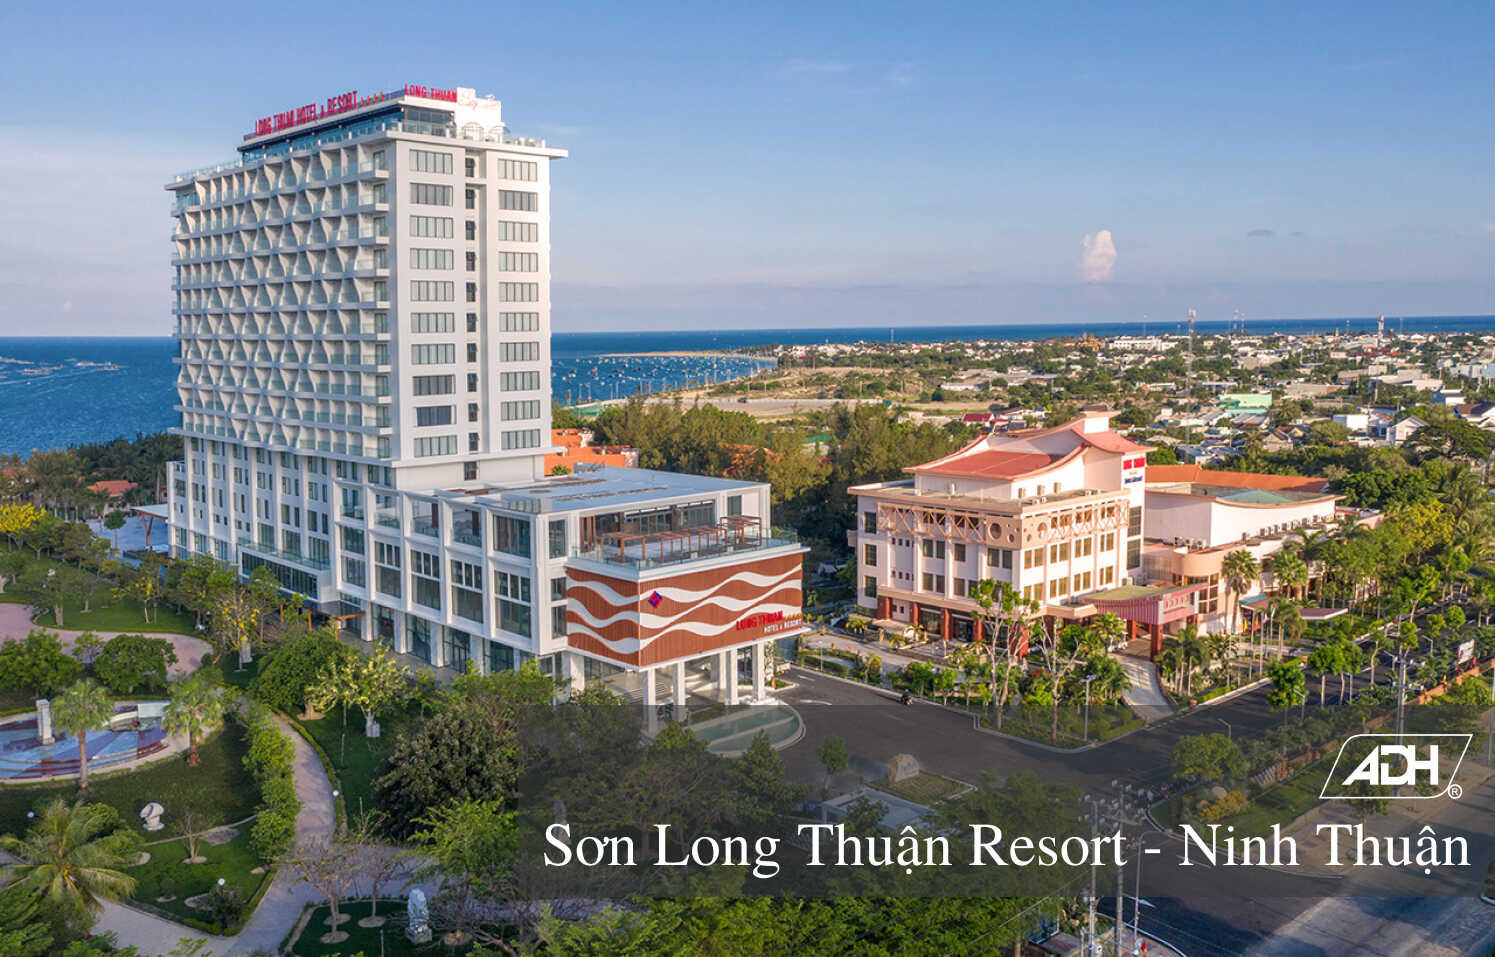 Sơn Long Thuận Resort - Ninh Thuận